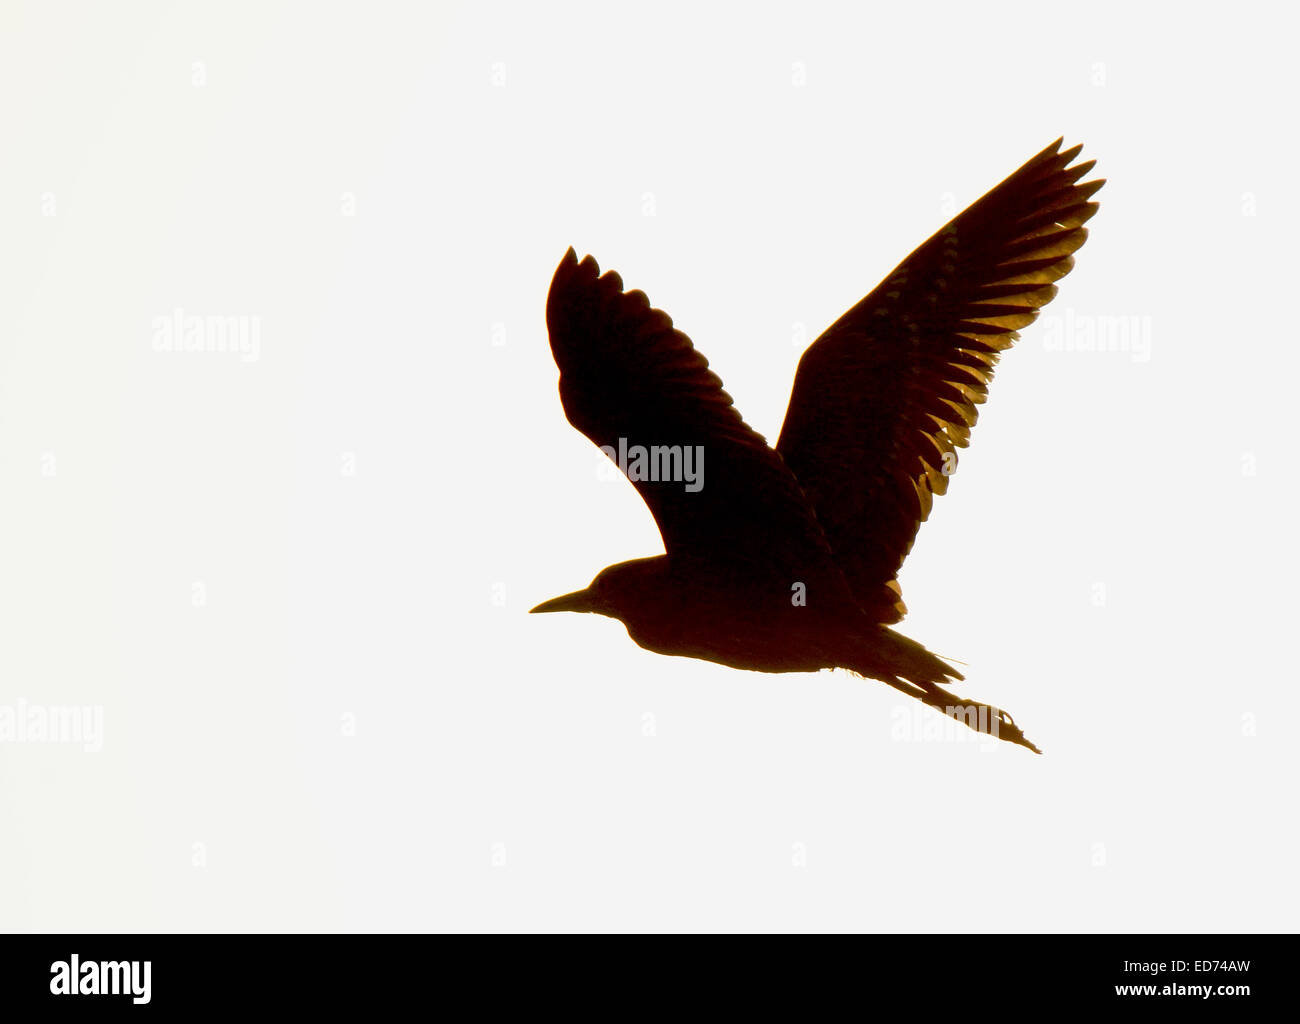 Heron flying, Silhouette Stock Photo